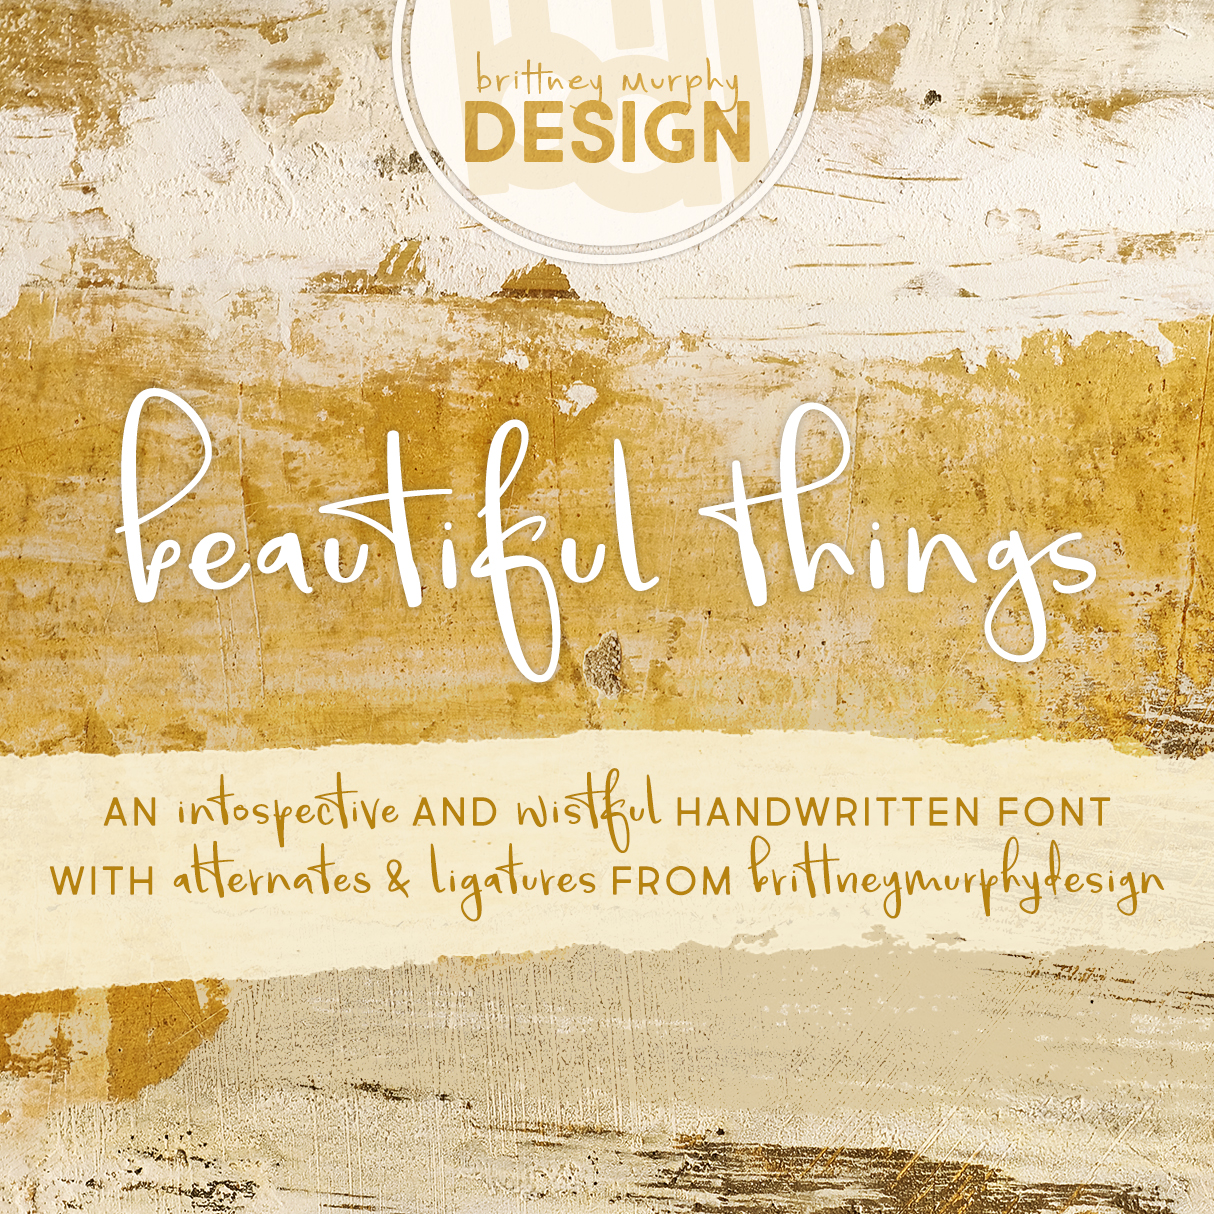 Beautiful Things font